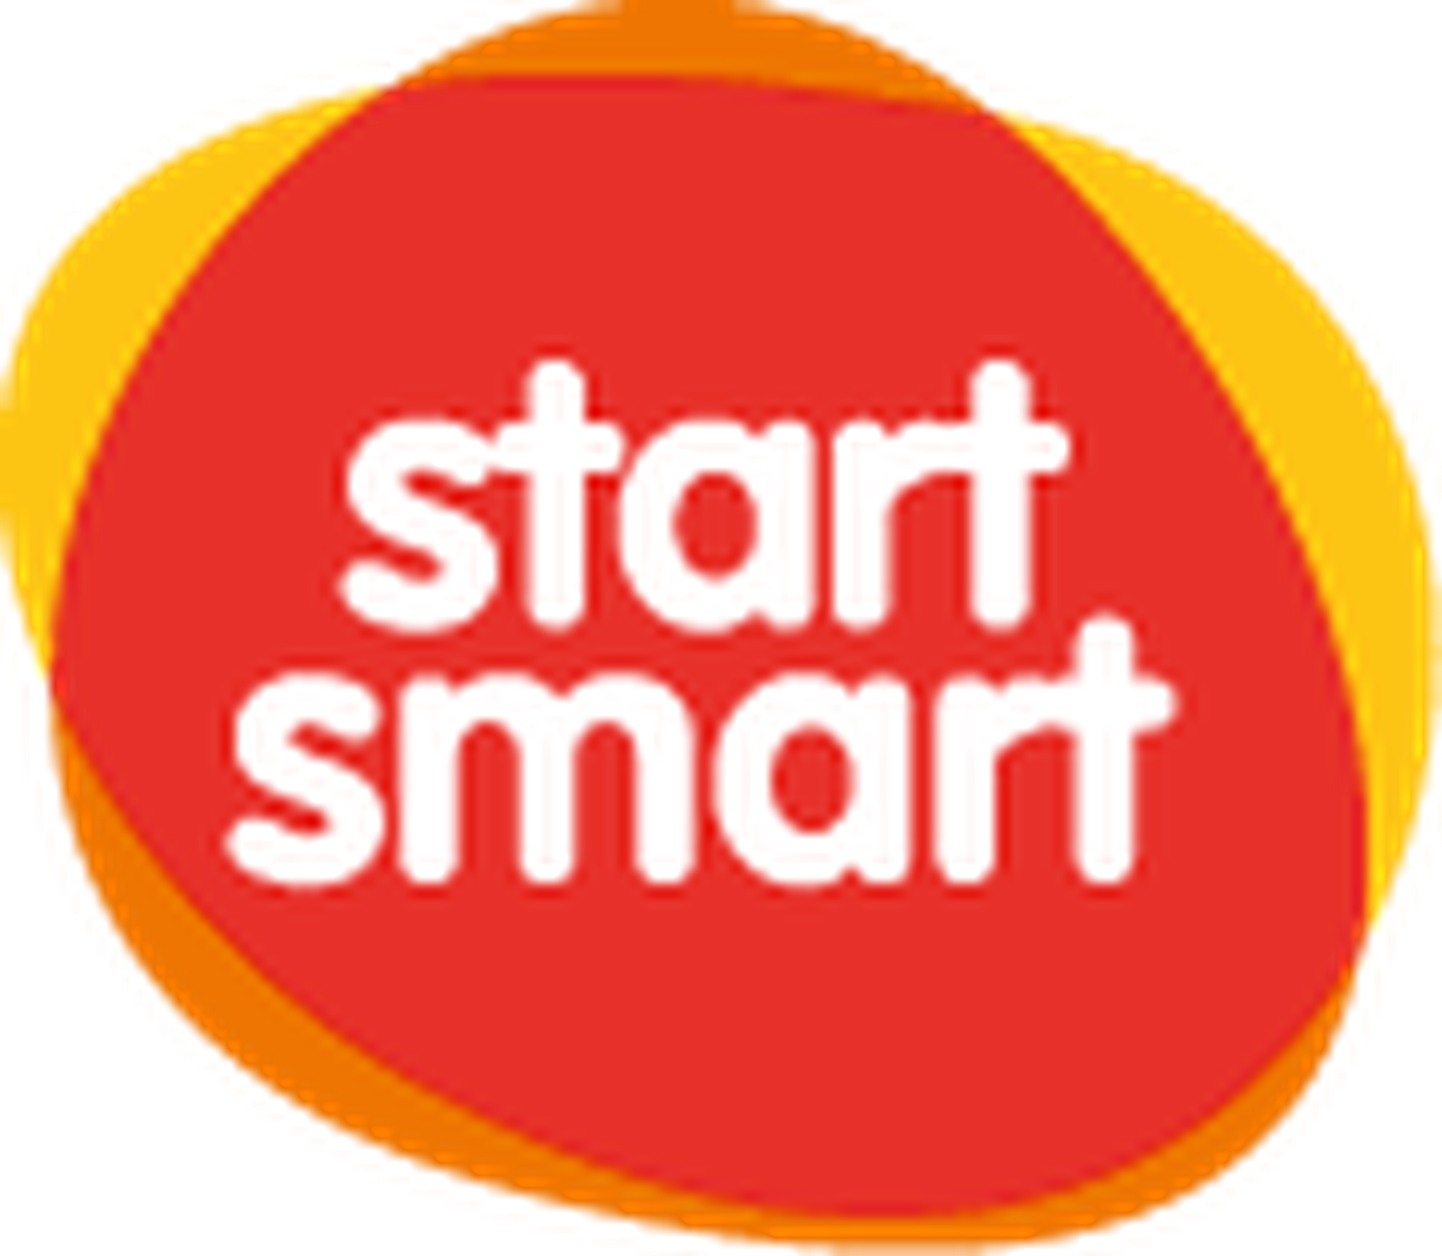 StartsSmarti logo.